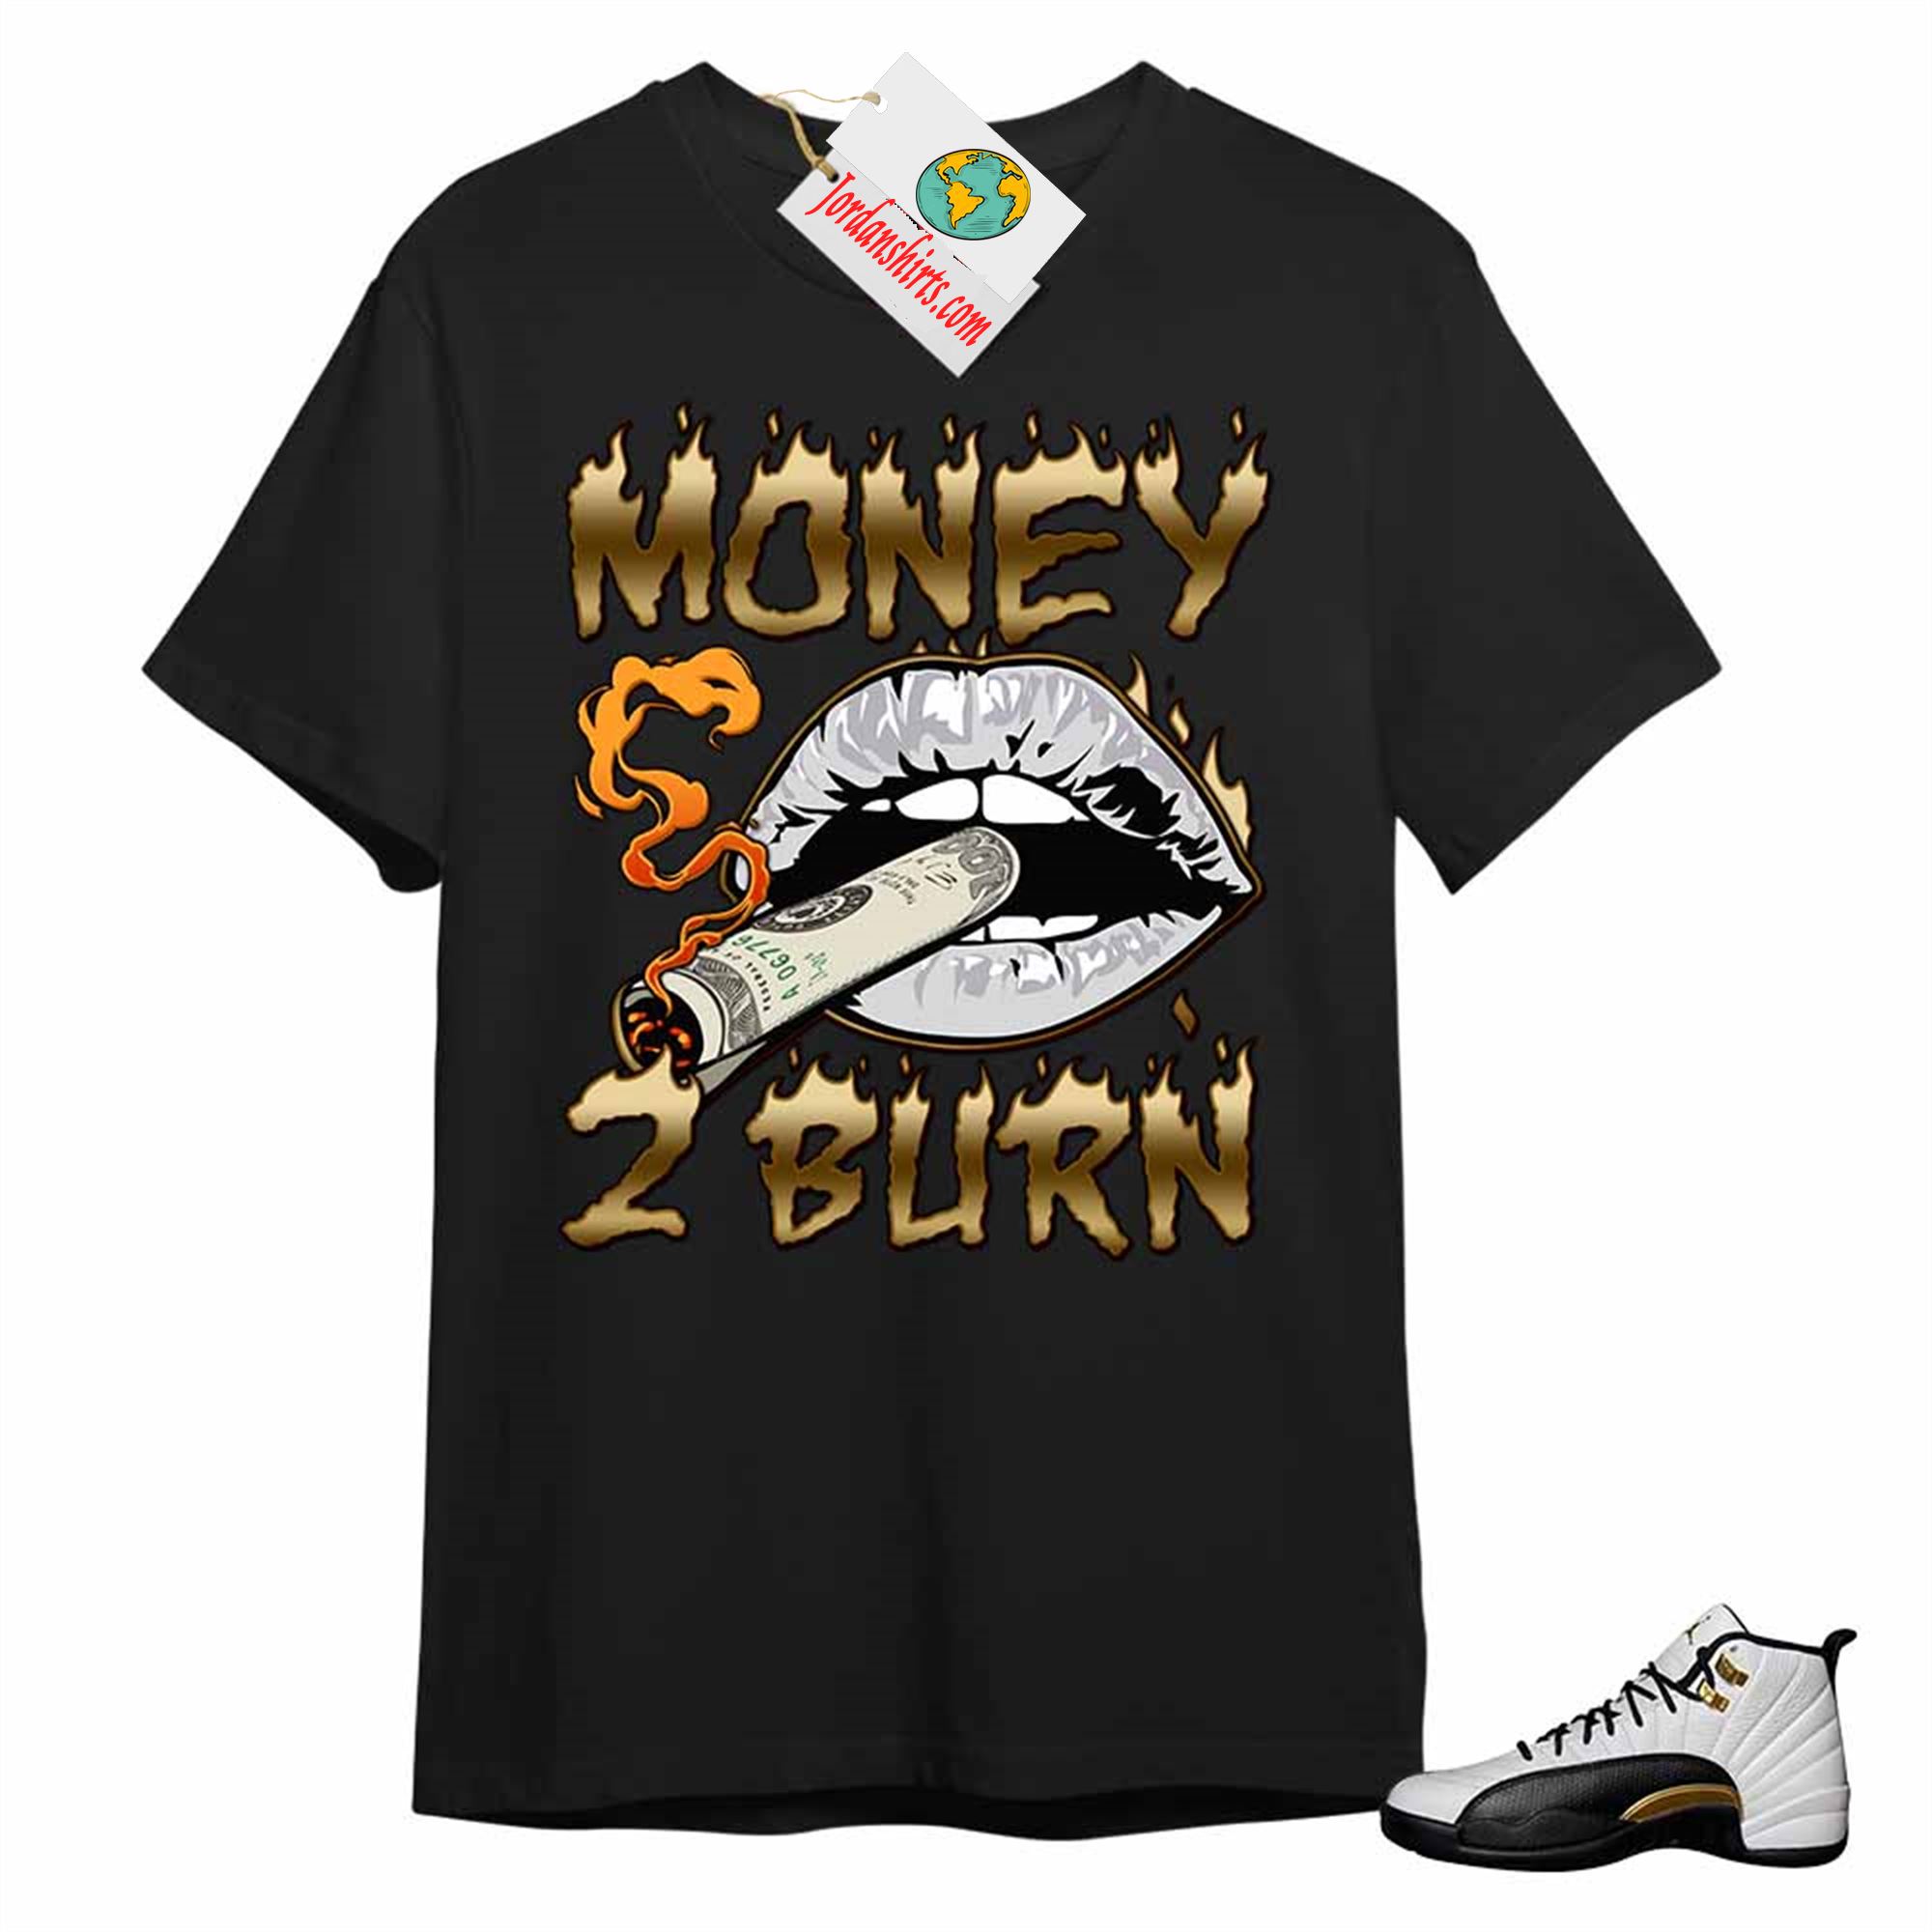 Jordan 12 Shirt, Money To Burn Black T-shirt Air Jordan 12 Royalty 12s Plus Size Up To 5xl